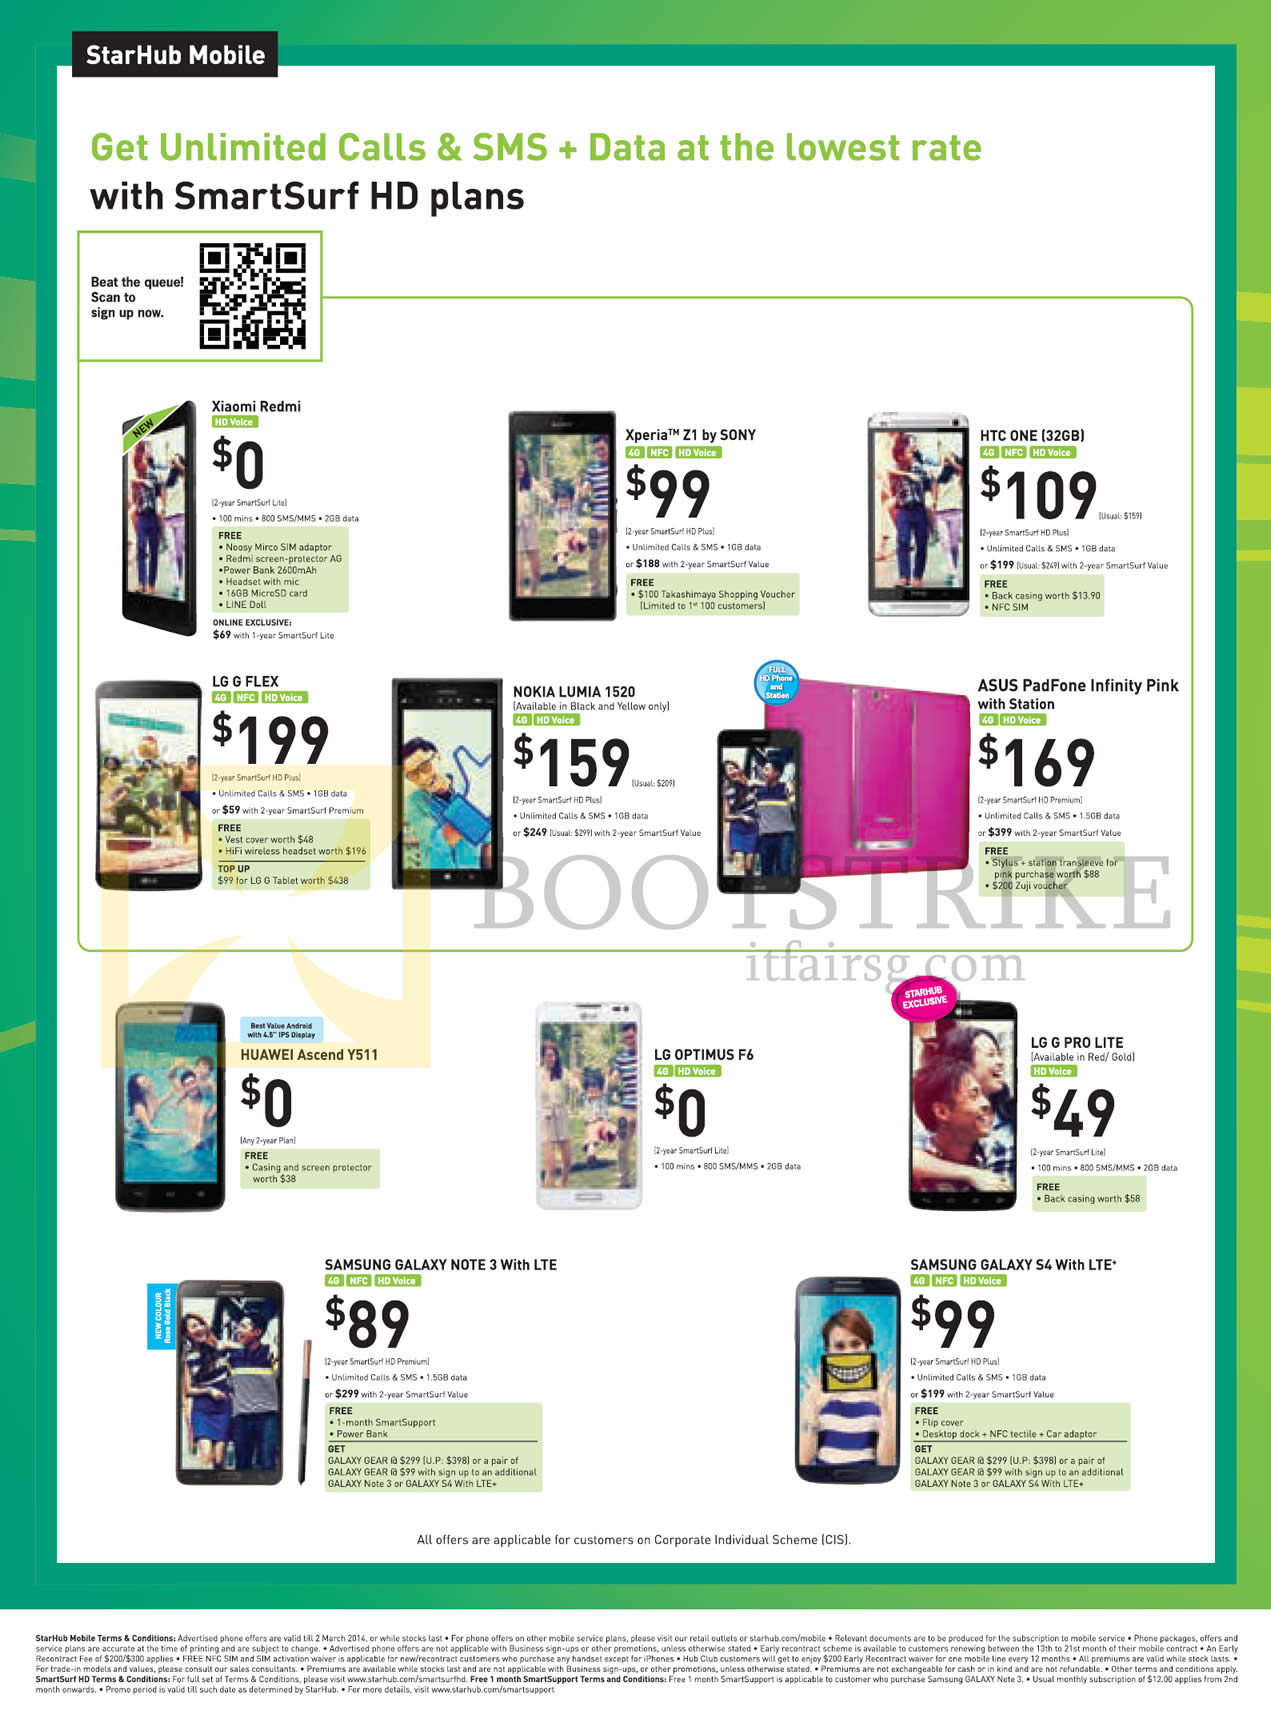 IT SHOW 2014 price list image brochure of Starhub Mobile Xiaomi Redmi, Sony Xperia Z1, HTC One, LG G Flex, Nokia Lumia 1520, ASUS Padfone Infinity, Huawei Ascend Y511, LG Optimus F6, G Pro Lite, Samsung Galaxy Note 3, S4